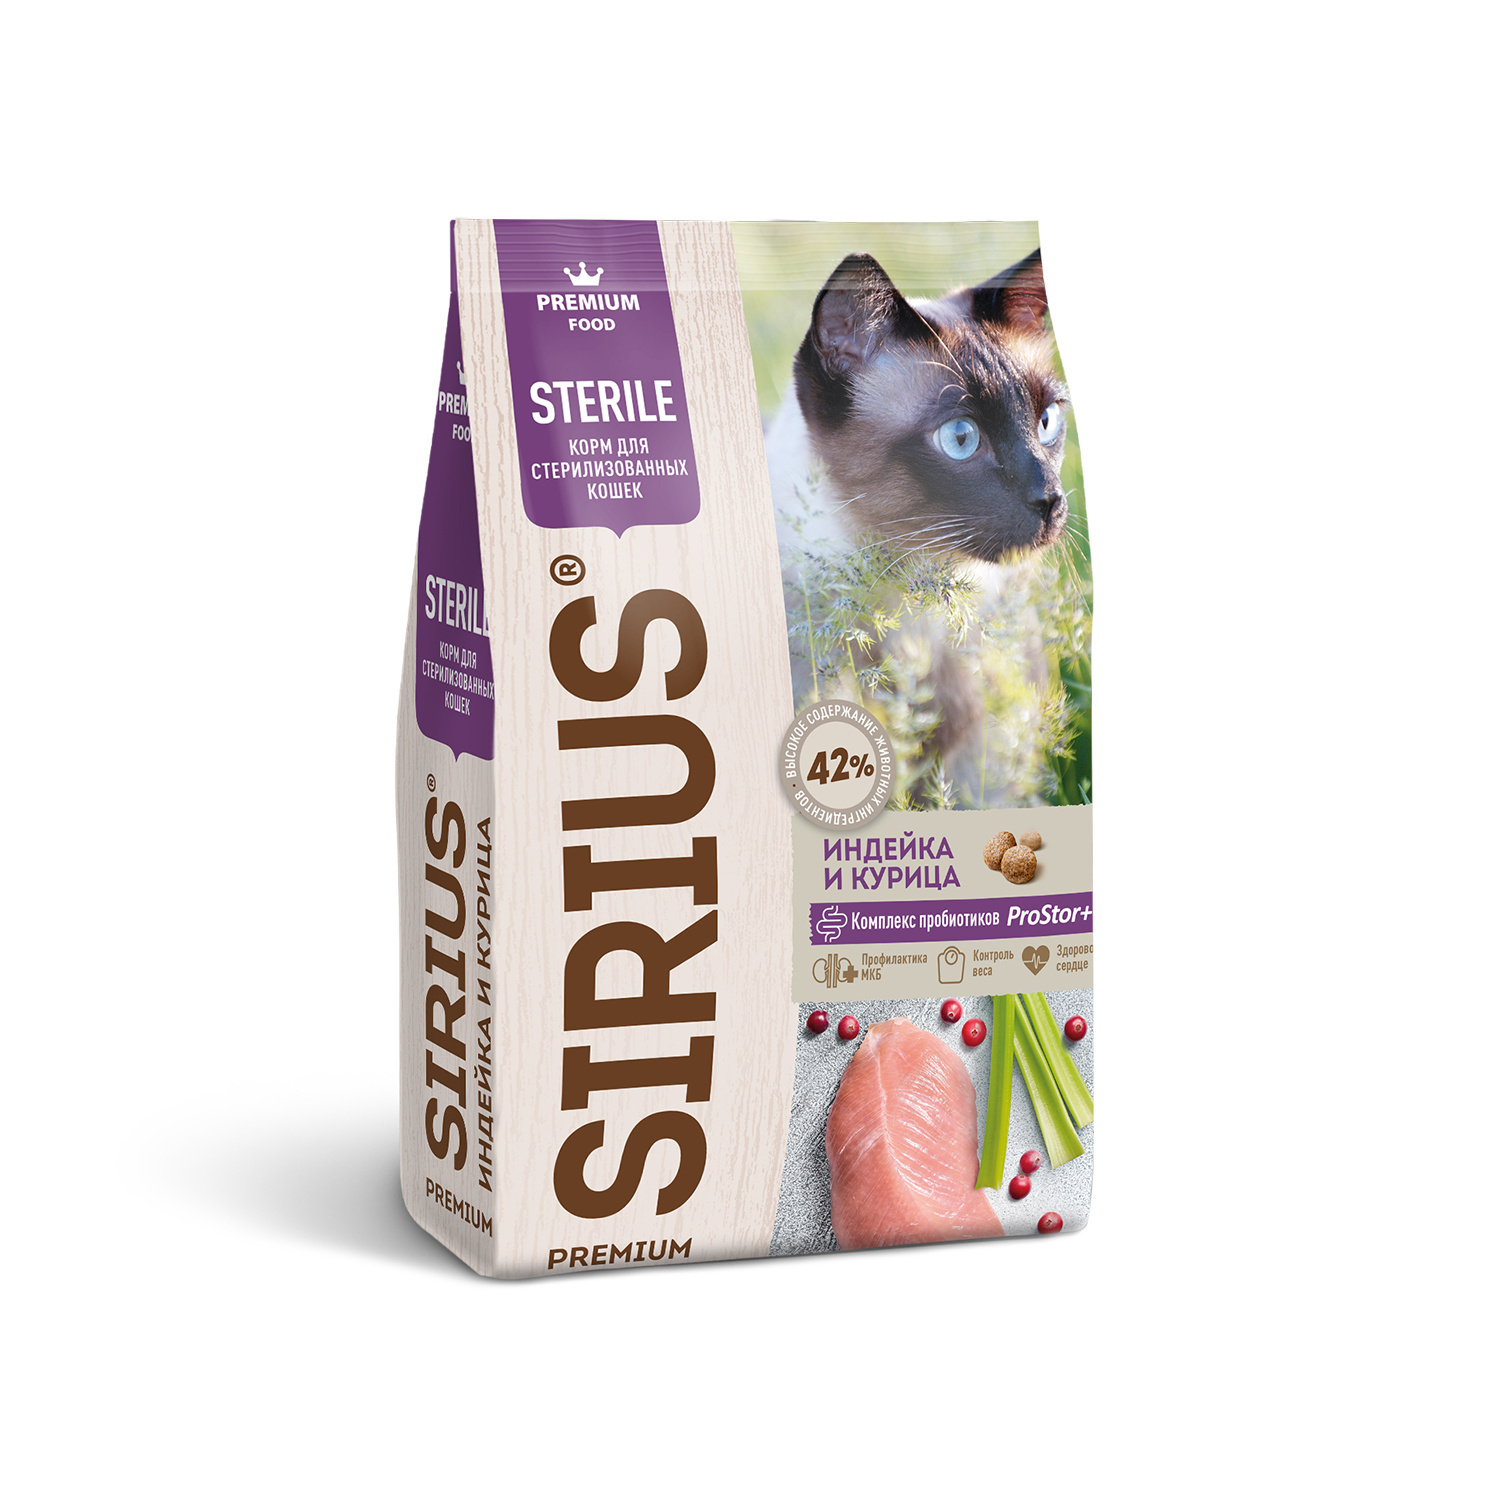 Sirius Sirius сухой корм для стерилизованных кошек, индейка и курица (400 г) sirius sirius сухой корм для стерилизованных кошек индейка и курица 400 г